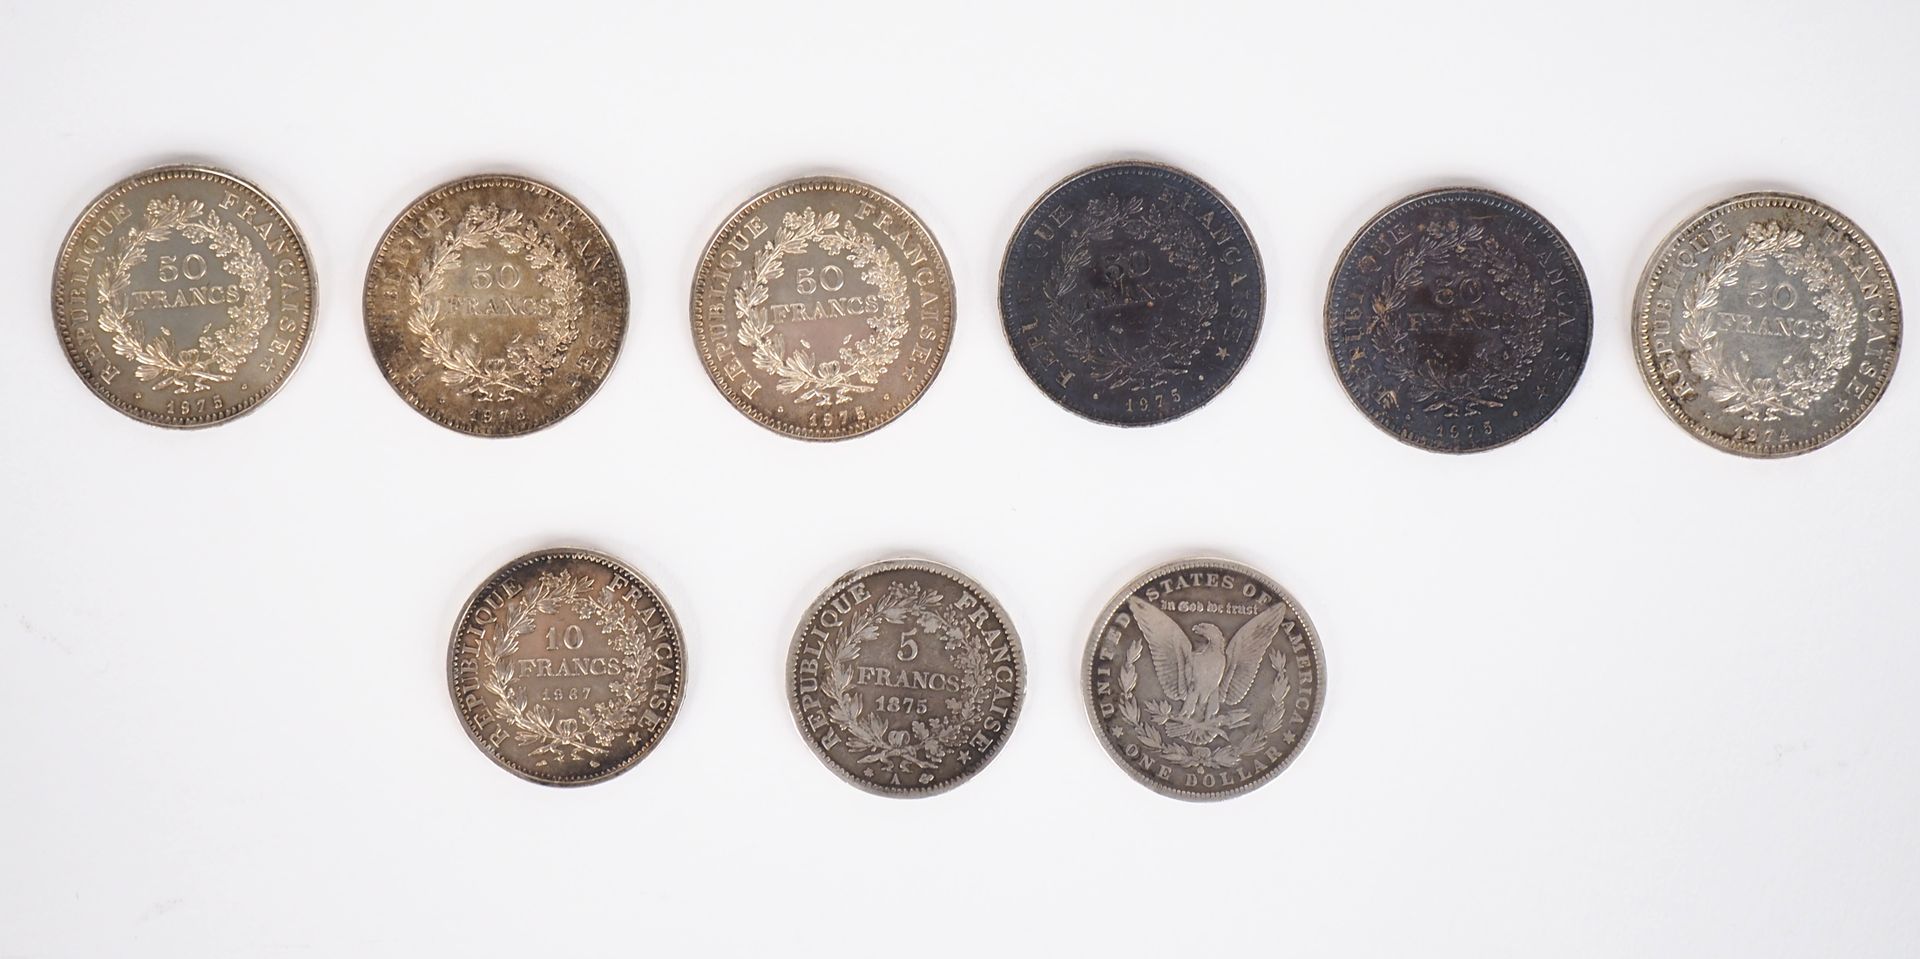 Null - sei monete d'argento da 50 franchi, 1974 e 1975 (x5).

- una moneta d'arg&hellip;